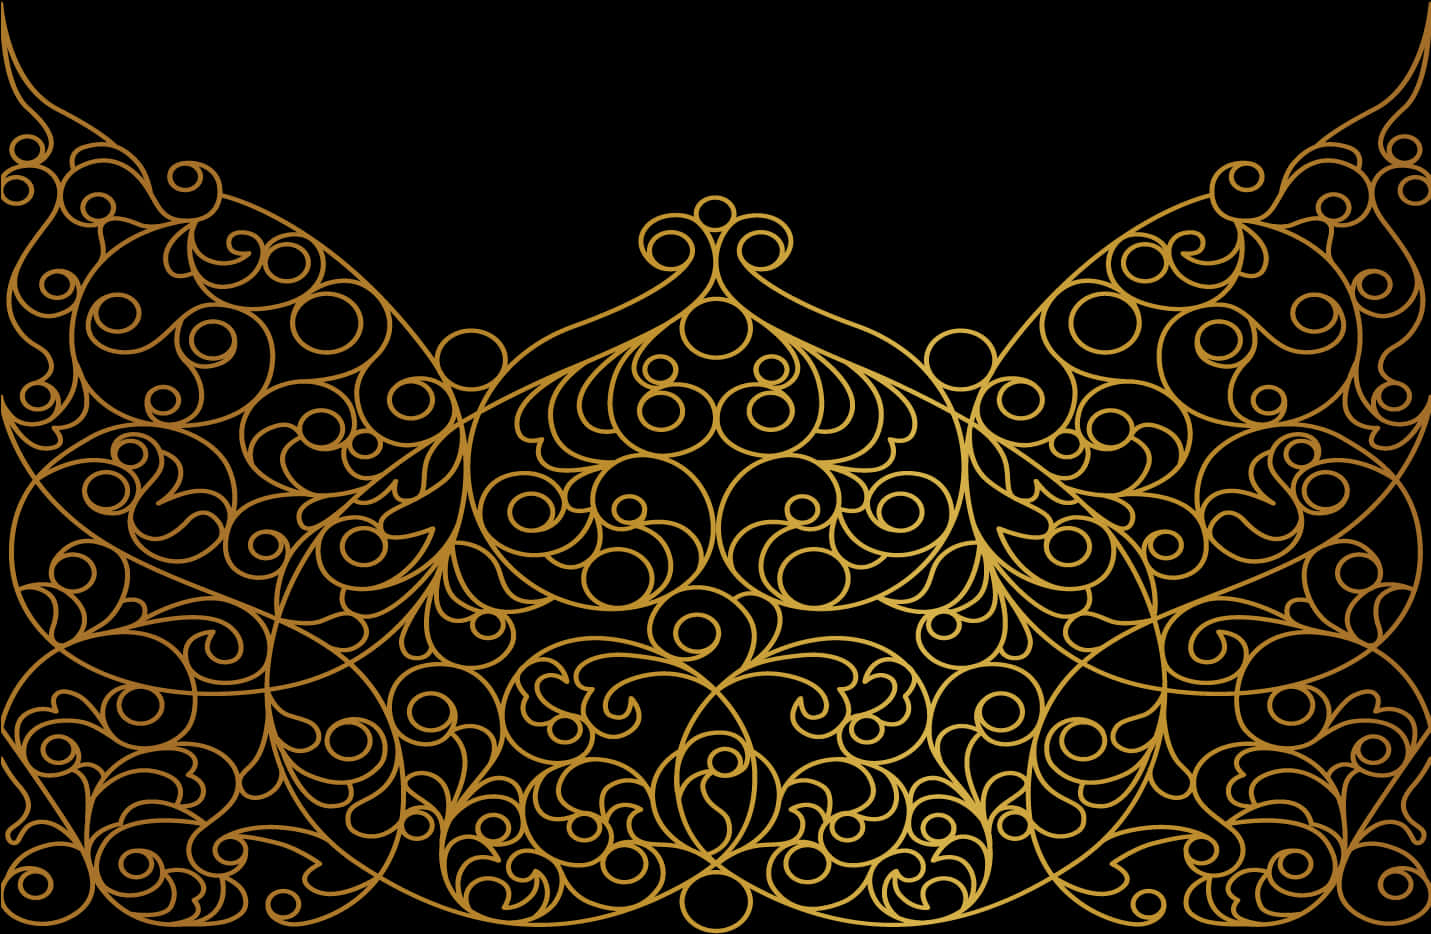 A Gold Ornate Design On A Black Background